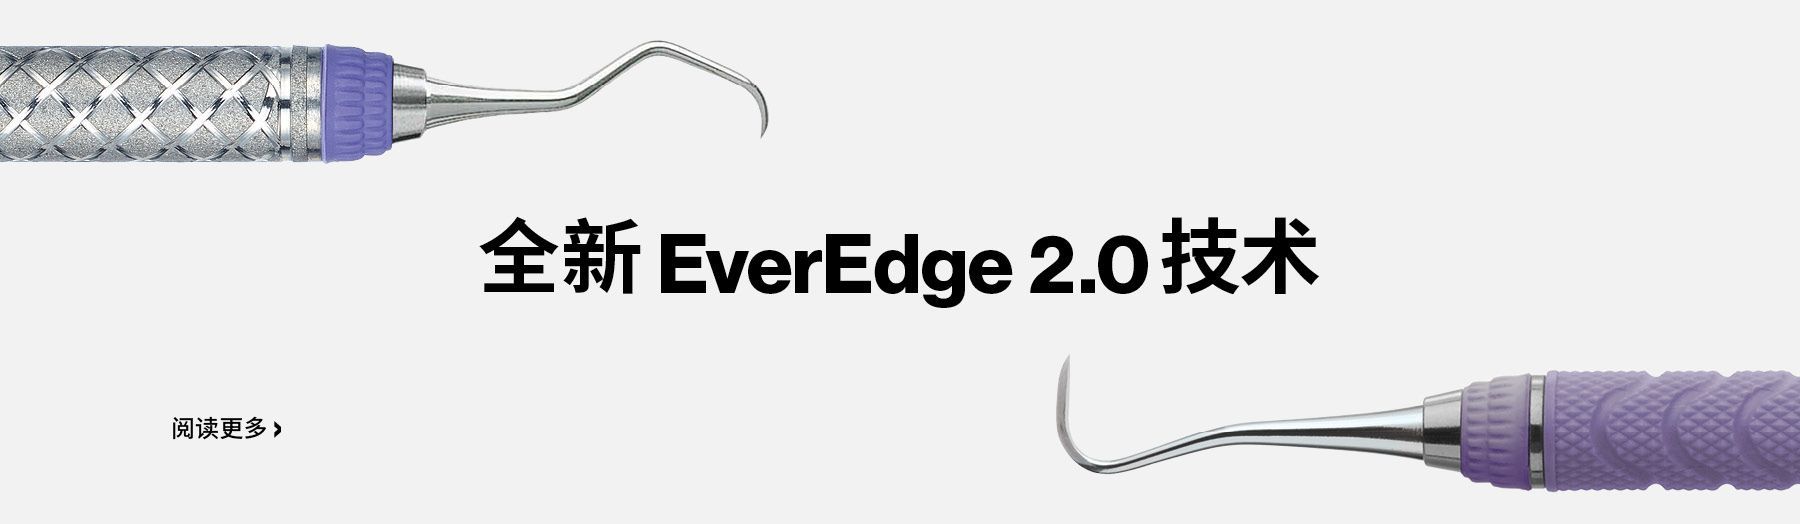 EverEdge 2.0